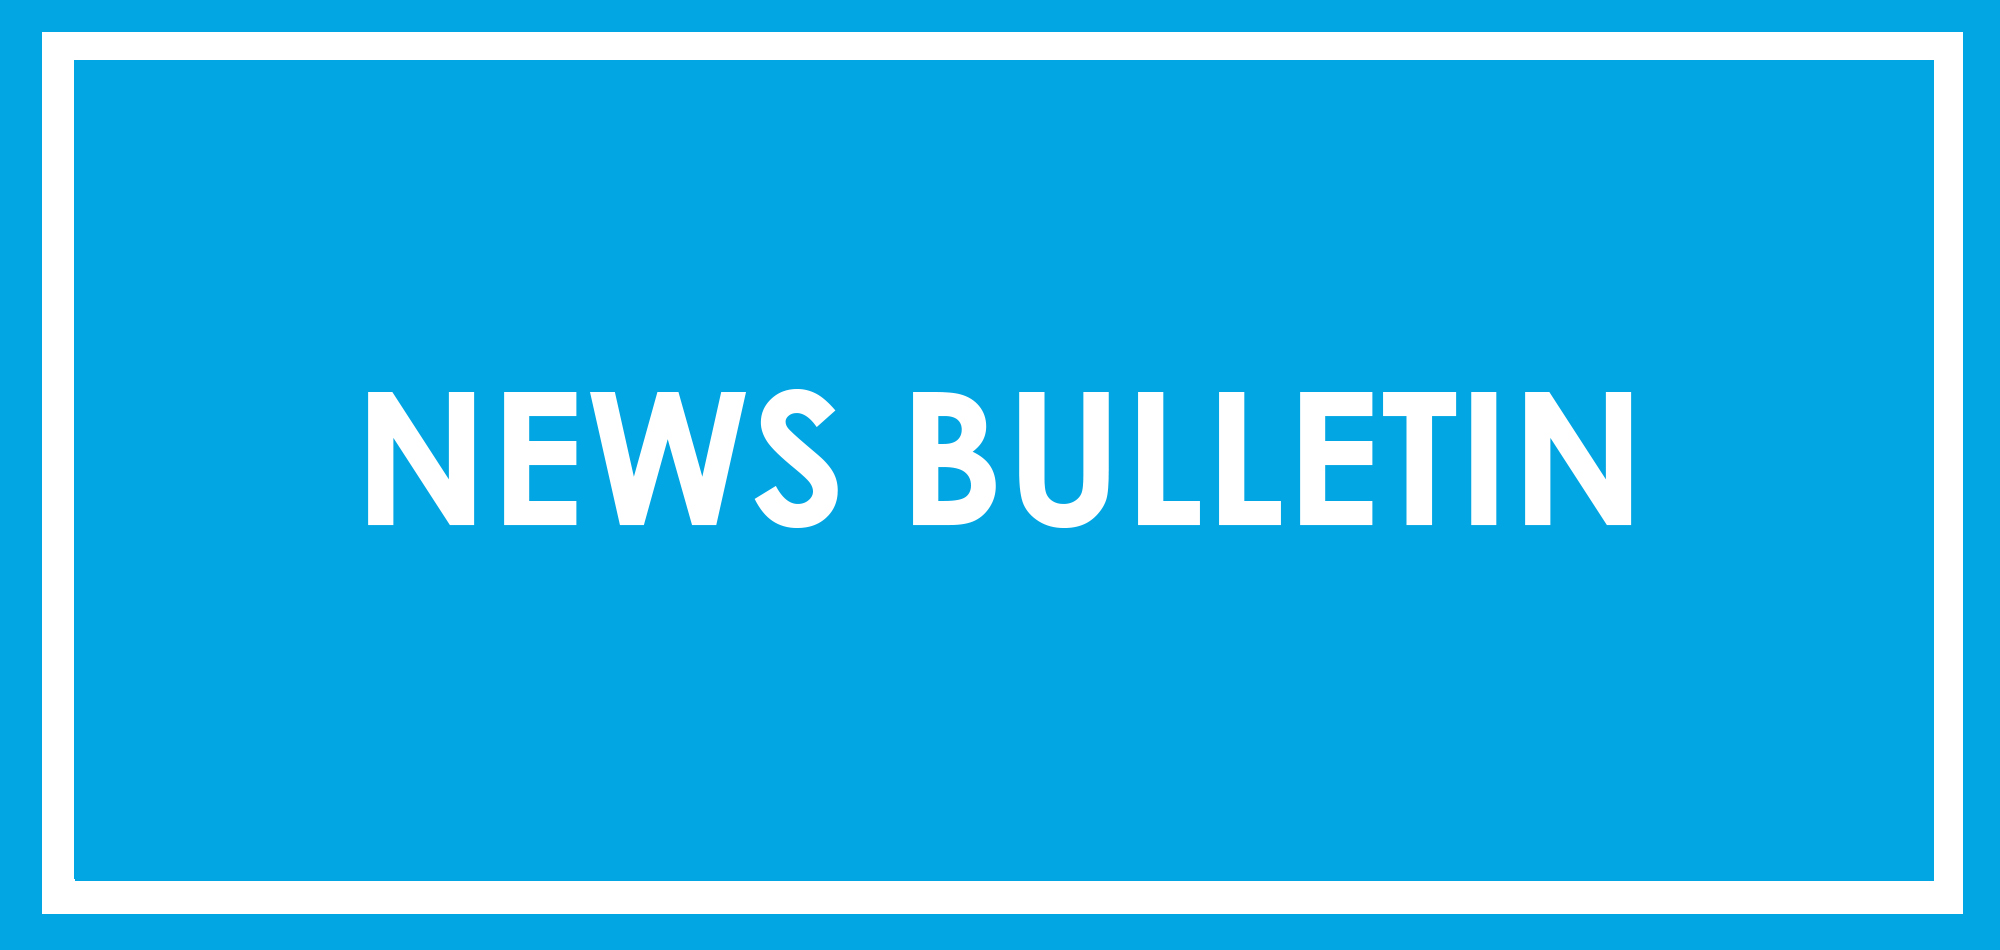 News Bulletin - 25.02.21